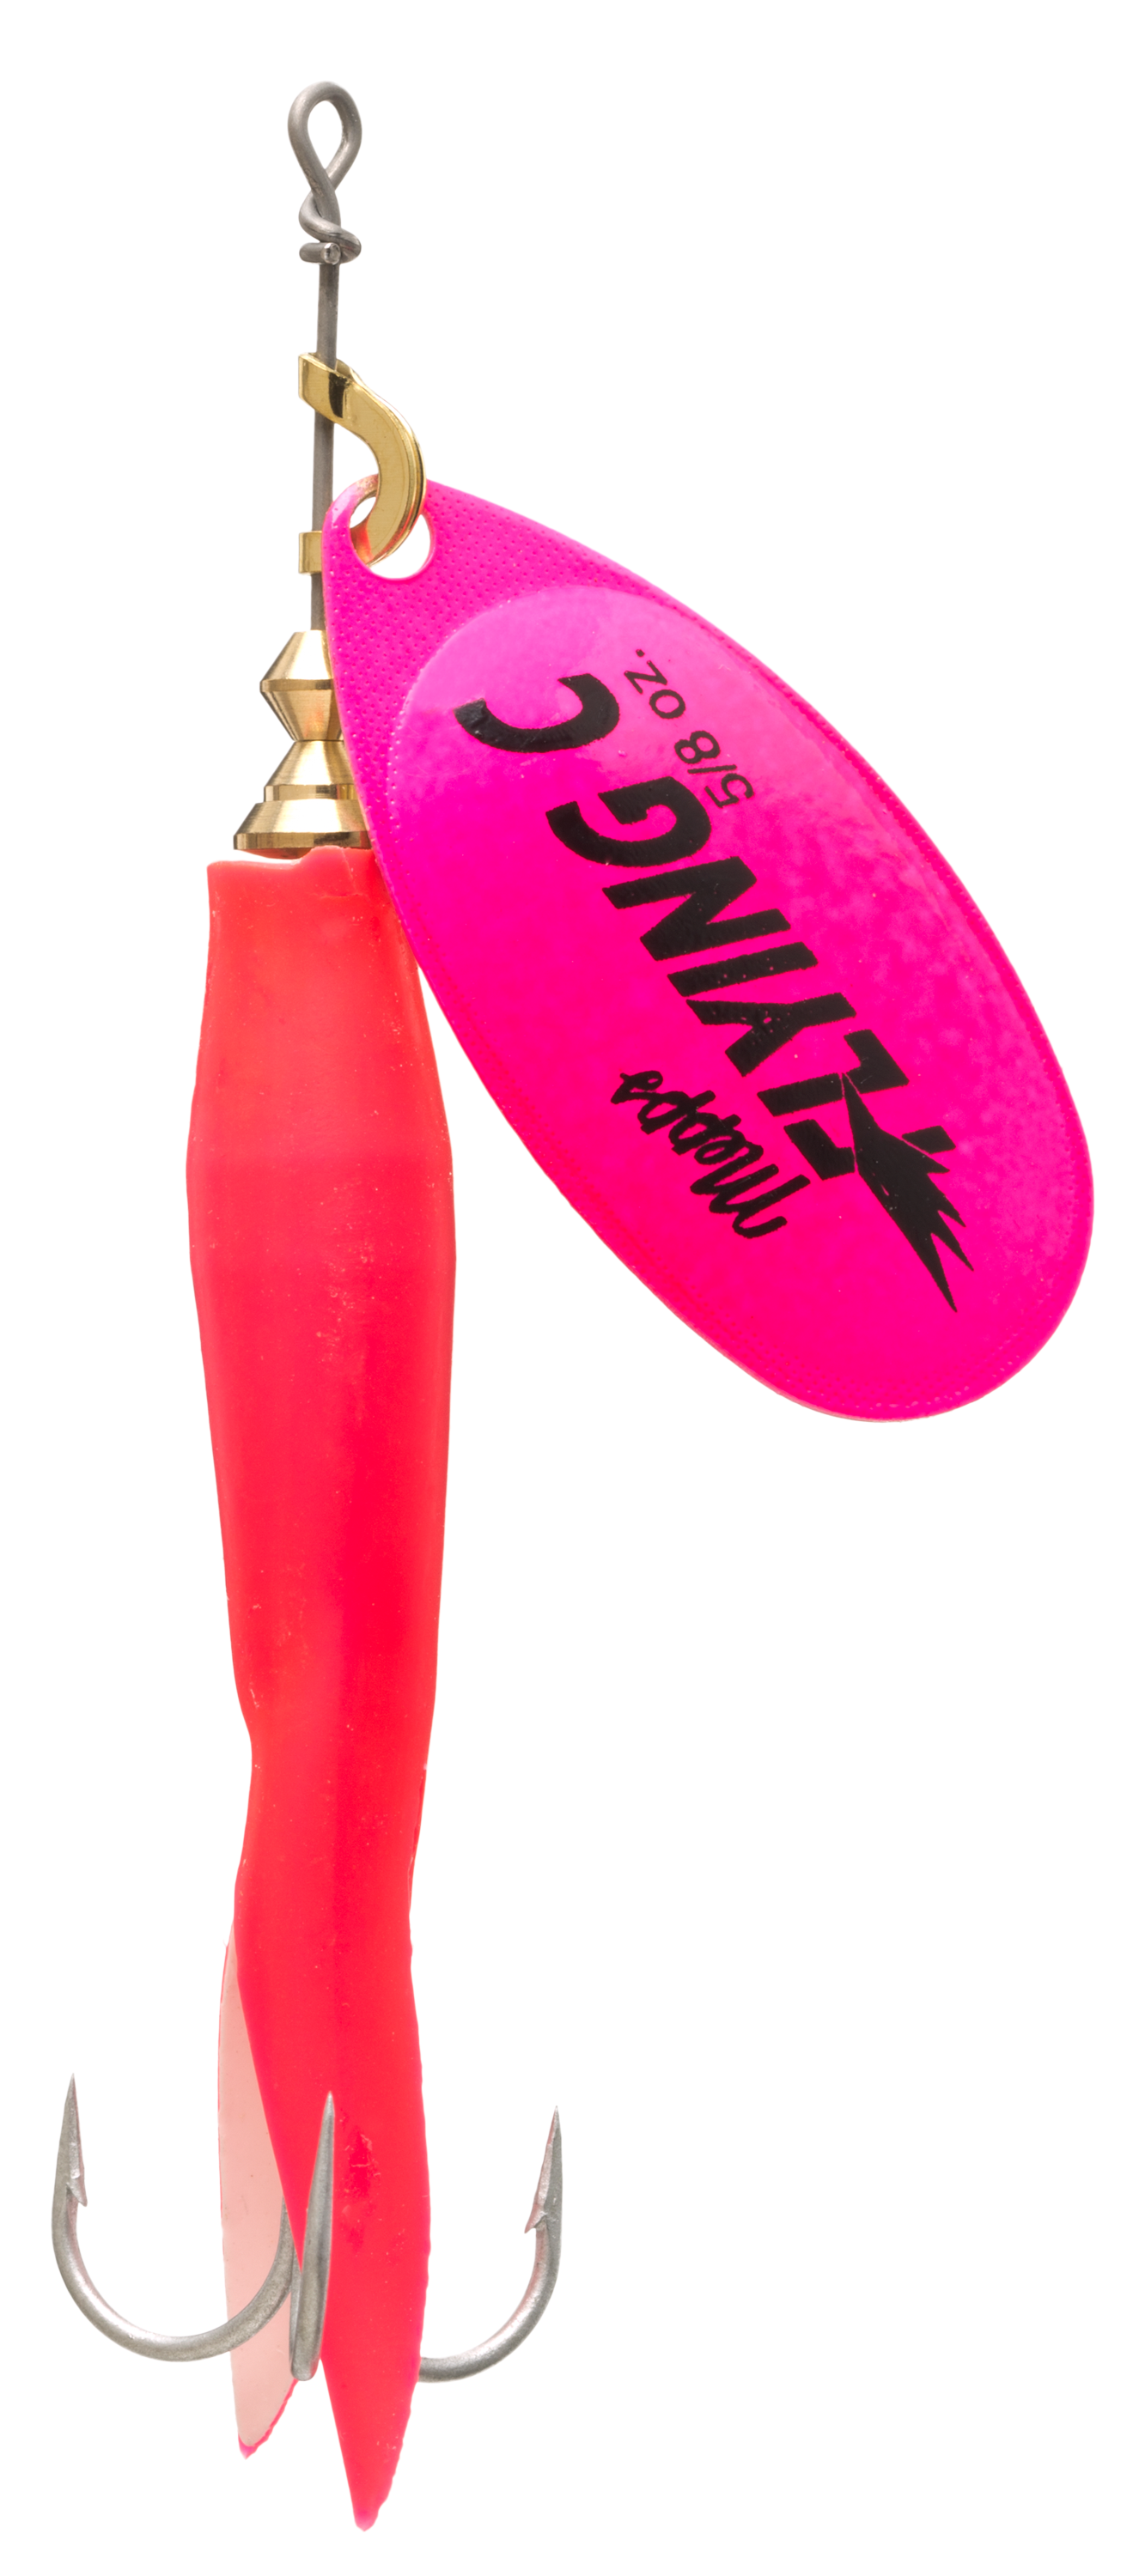 Mepps Flying C Spinner - 5/8 oz. - Pink/Pink